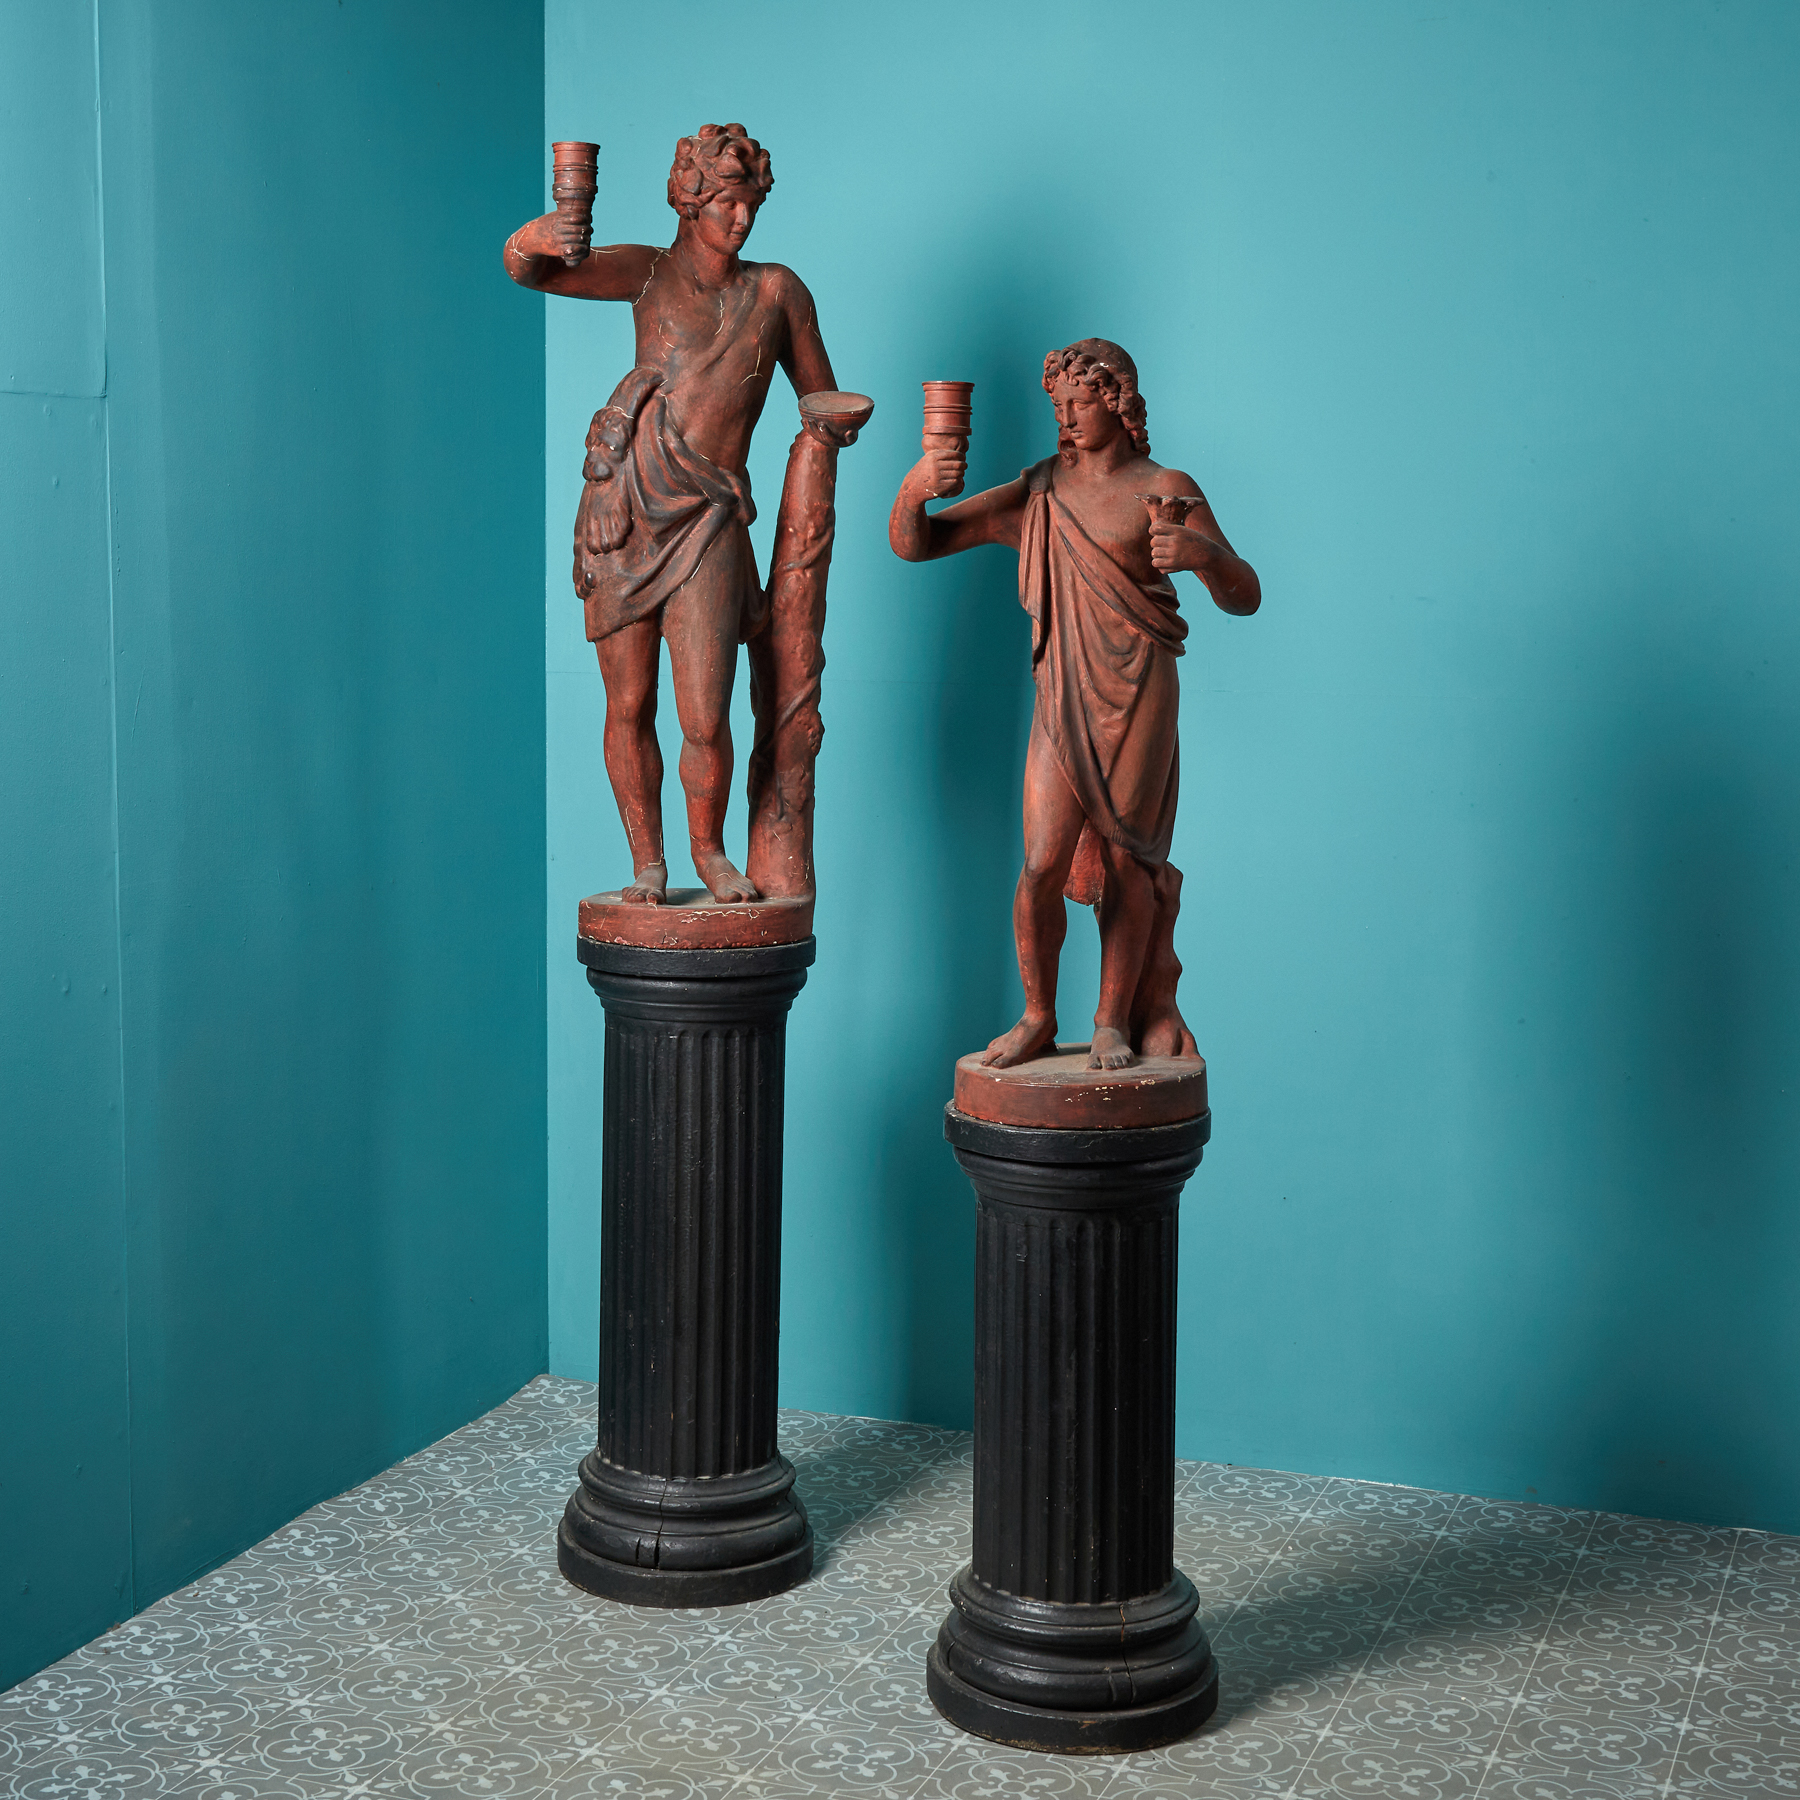 Two Antique Greek Figures on Pedestals